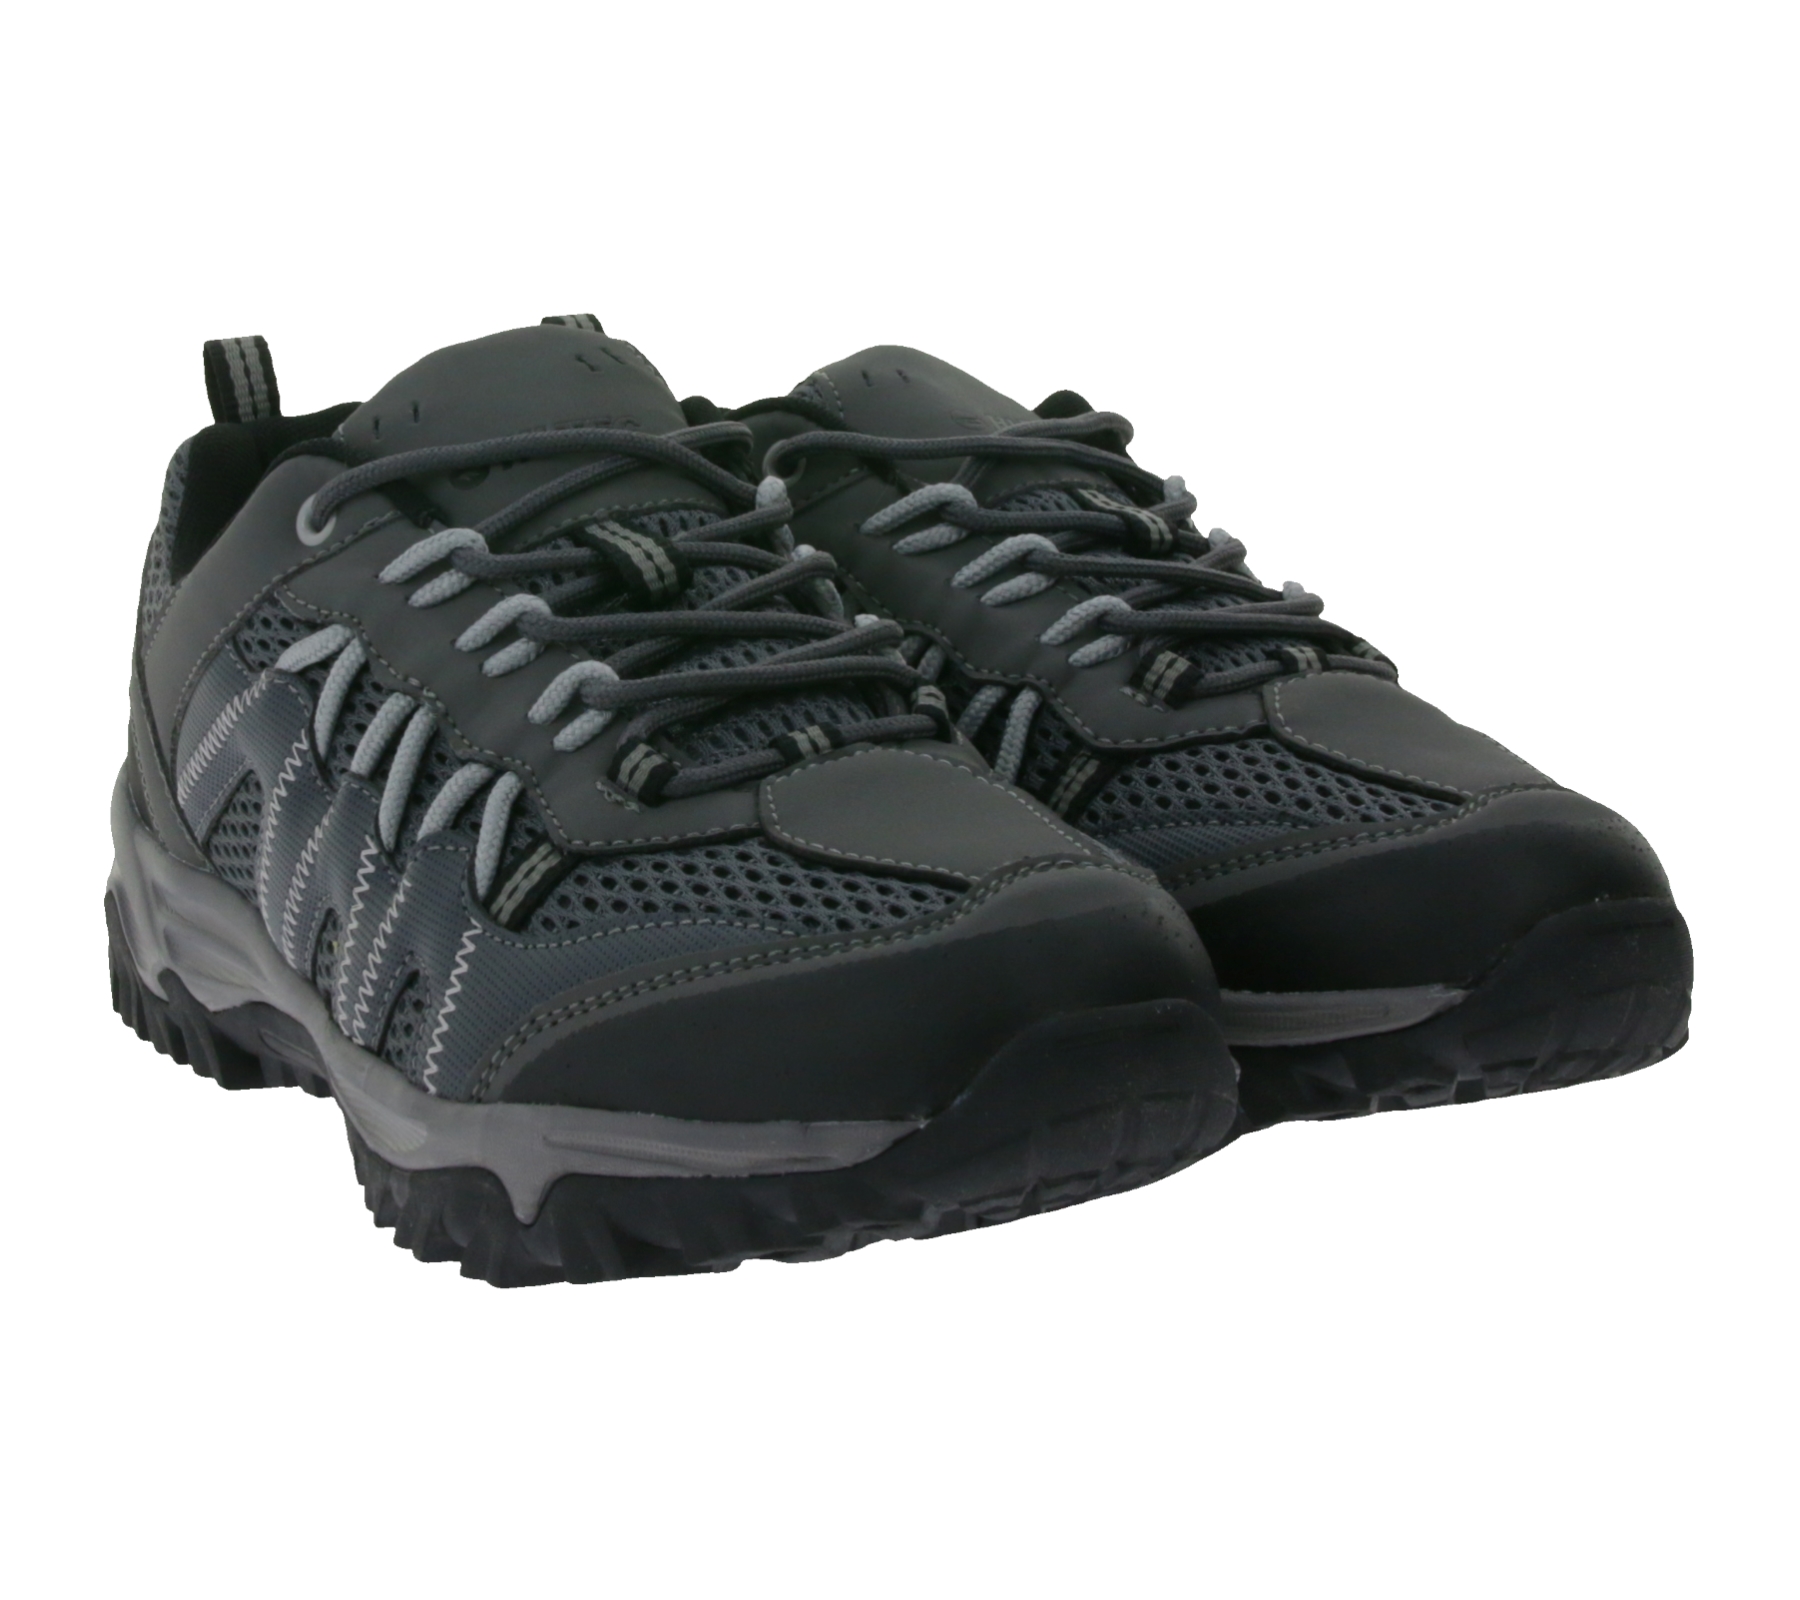 HI-TEC JAGUAR Herren komfortable Wander-Schuhe mit gepolsterter Zunge Outdoor-Schuhe O006524-051-01 Grau von HI-TEC